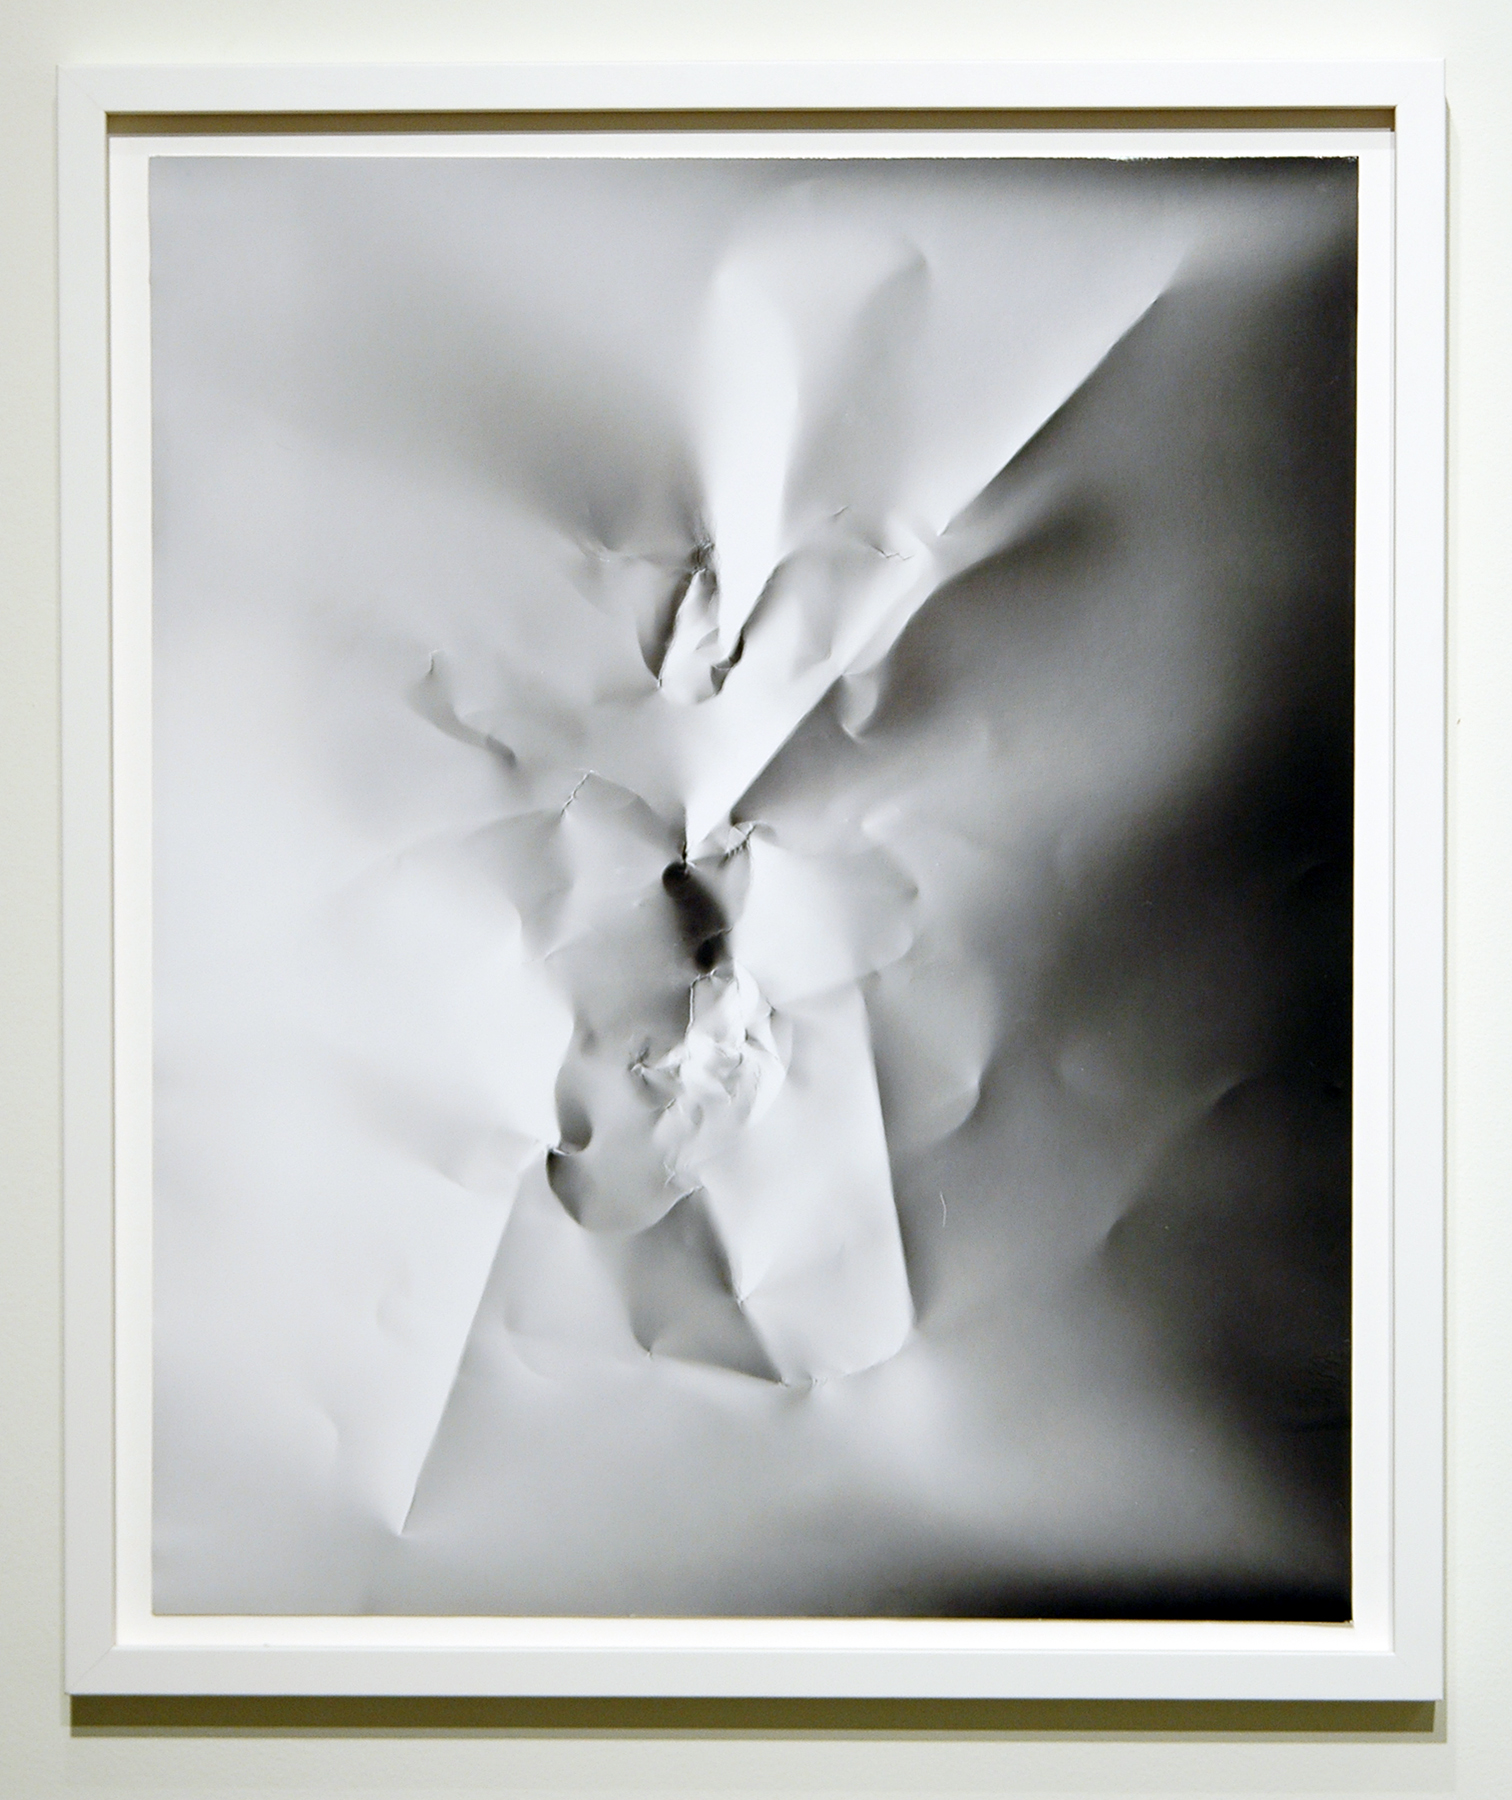   WITH CINDER BLOCKS WE FLATTEN OUR PHOTOGRAPHS  C. Wright Daniel, &nbsp;Untitled (Portrait) , unique silver gelatin print, 26.5" x 22", 2013 